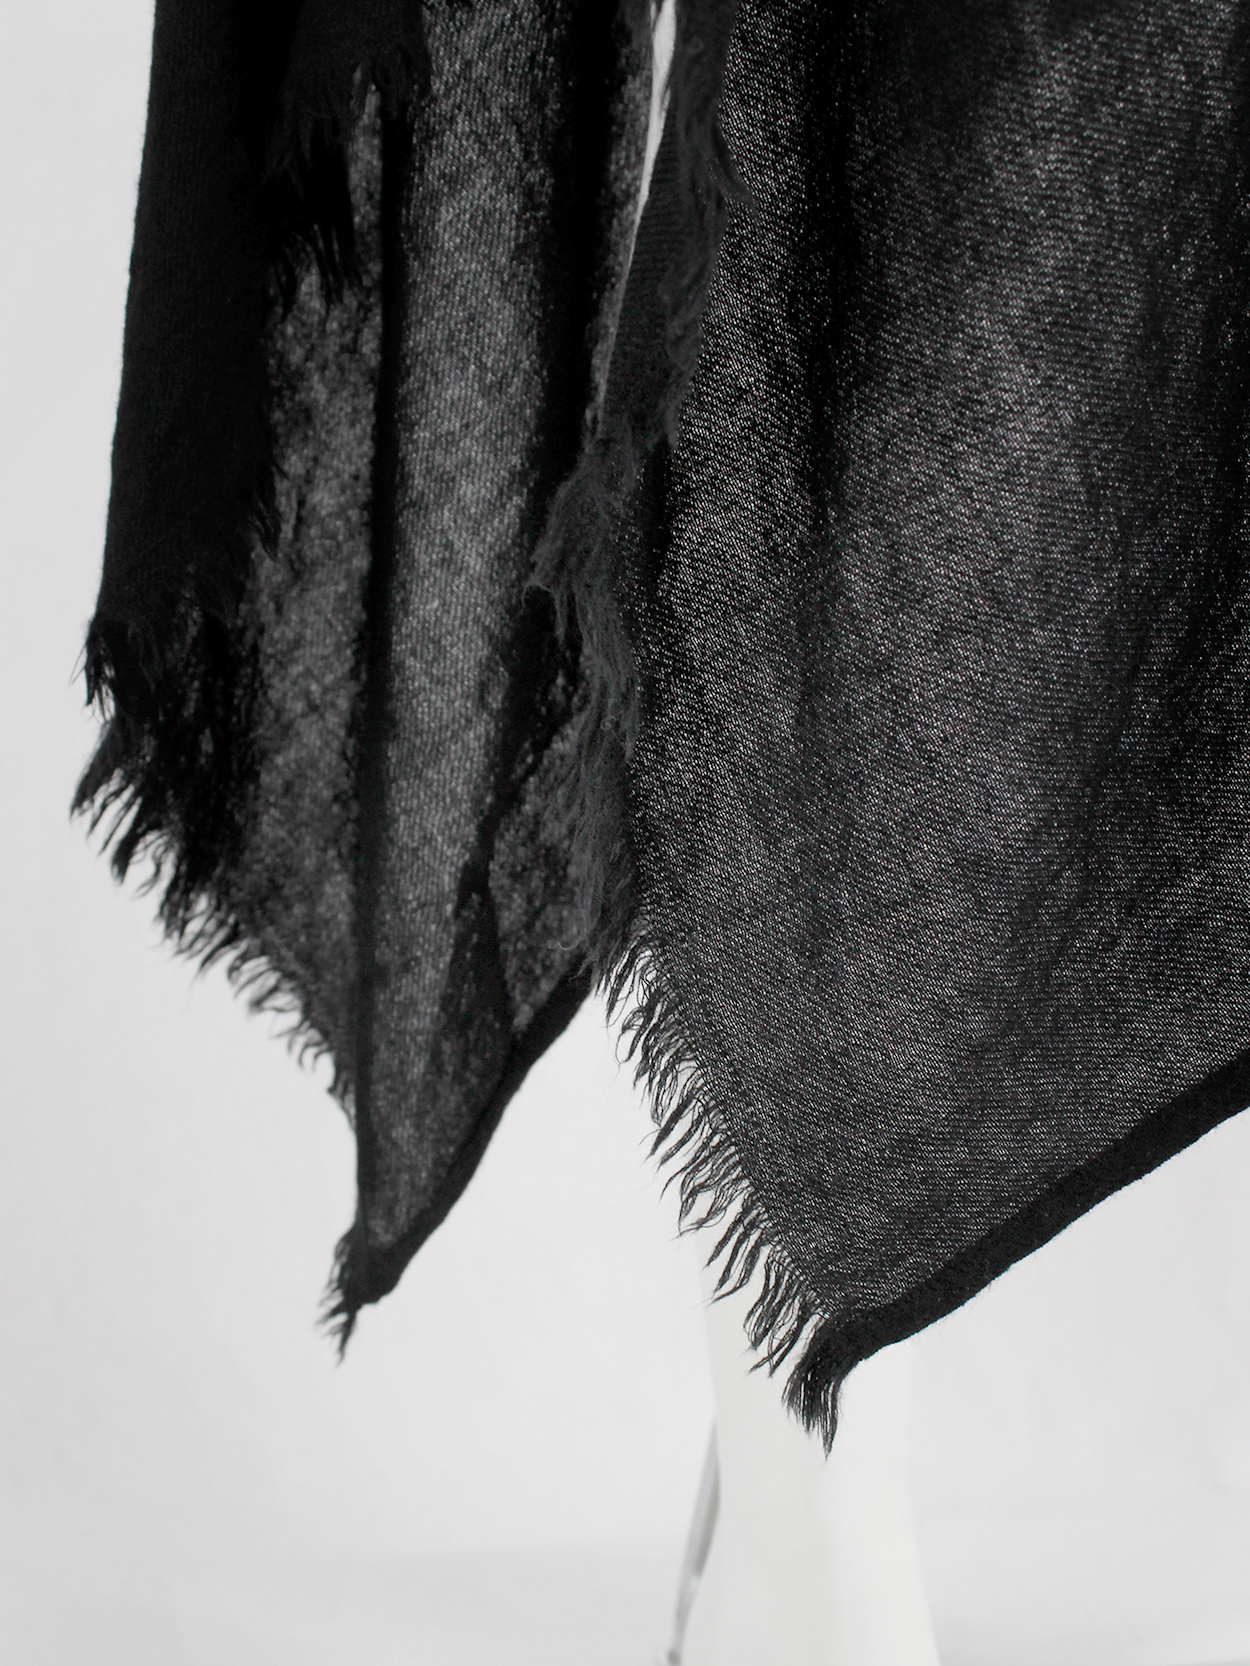 Yohji Yamamoto black miniskirt with black draped scarf - V A N II T A S